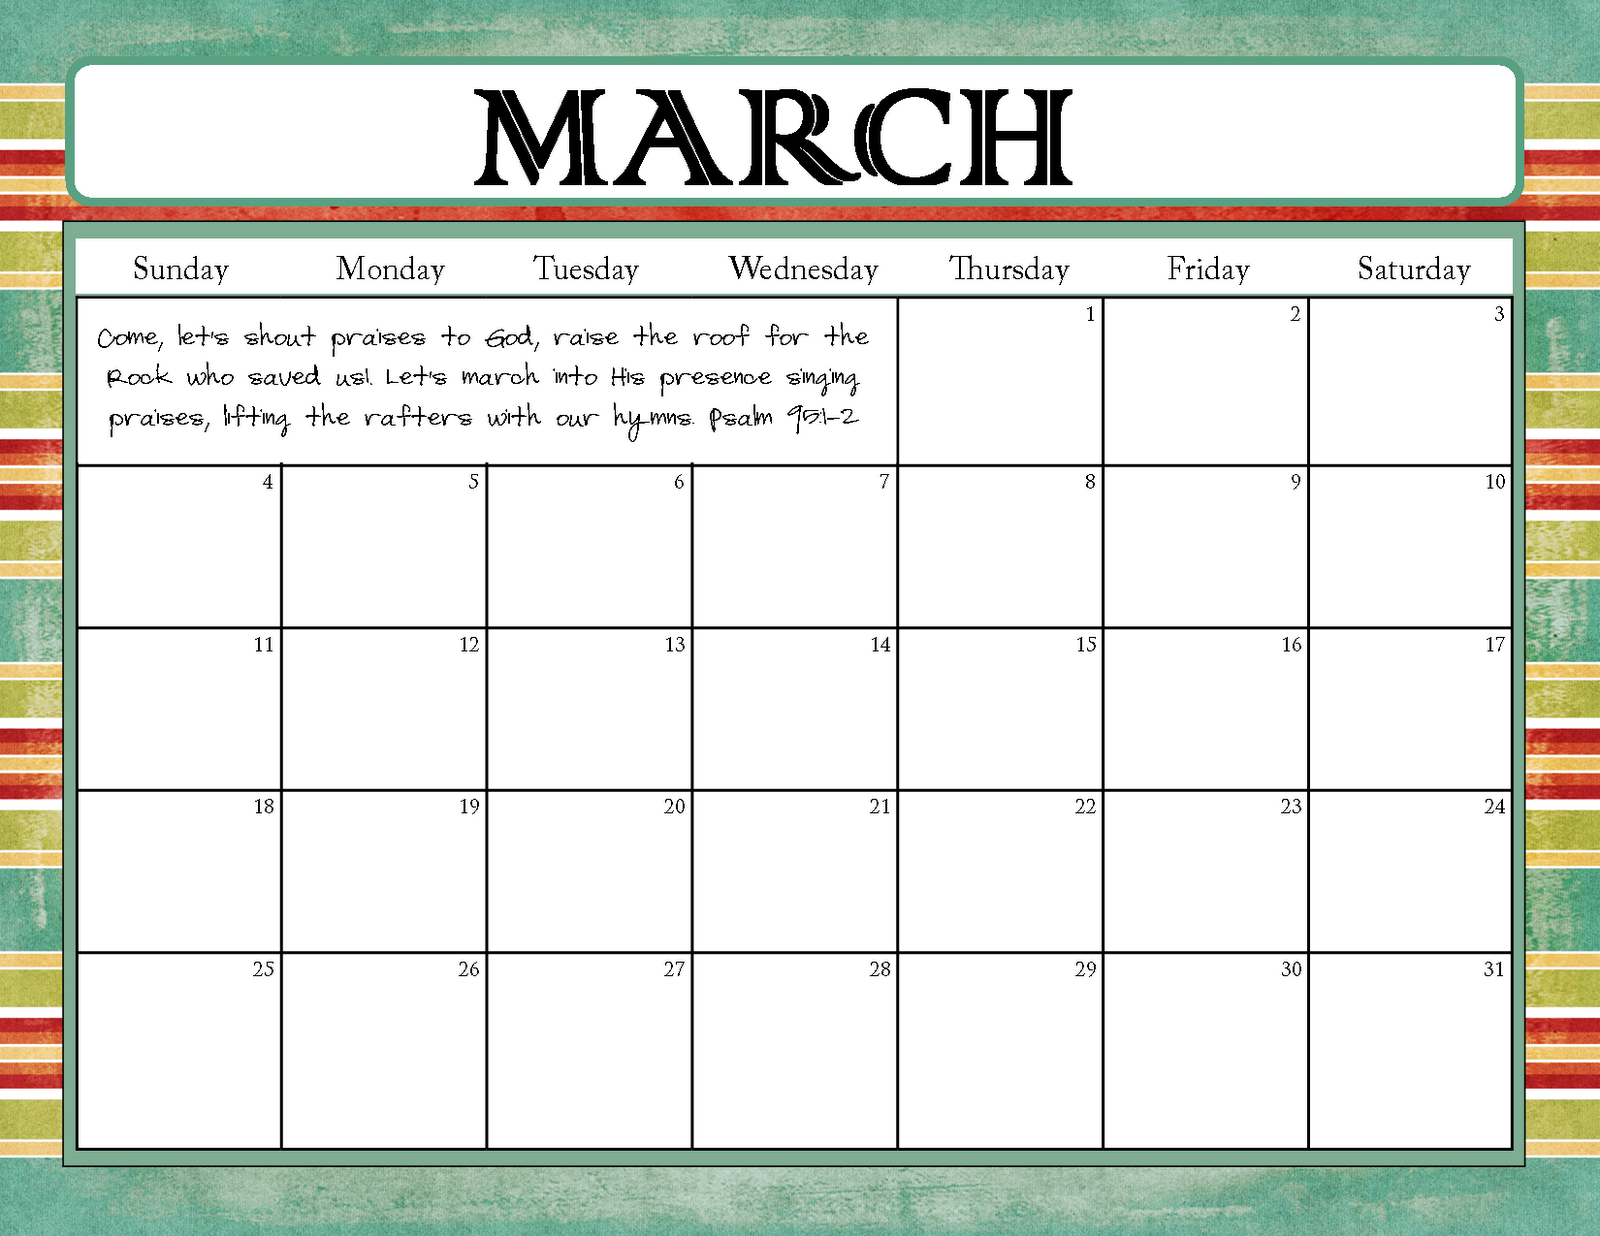 Календарь на март 25 года. Календарь March. Календарь на март для заметок. Календарь март для Инстаграм. Планы на март календарь.